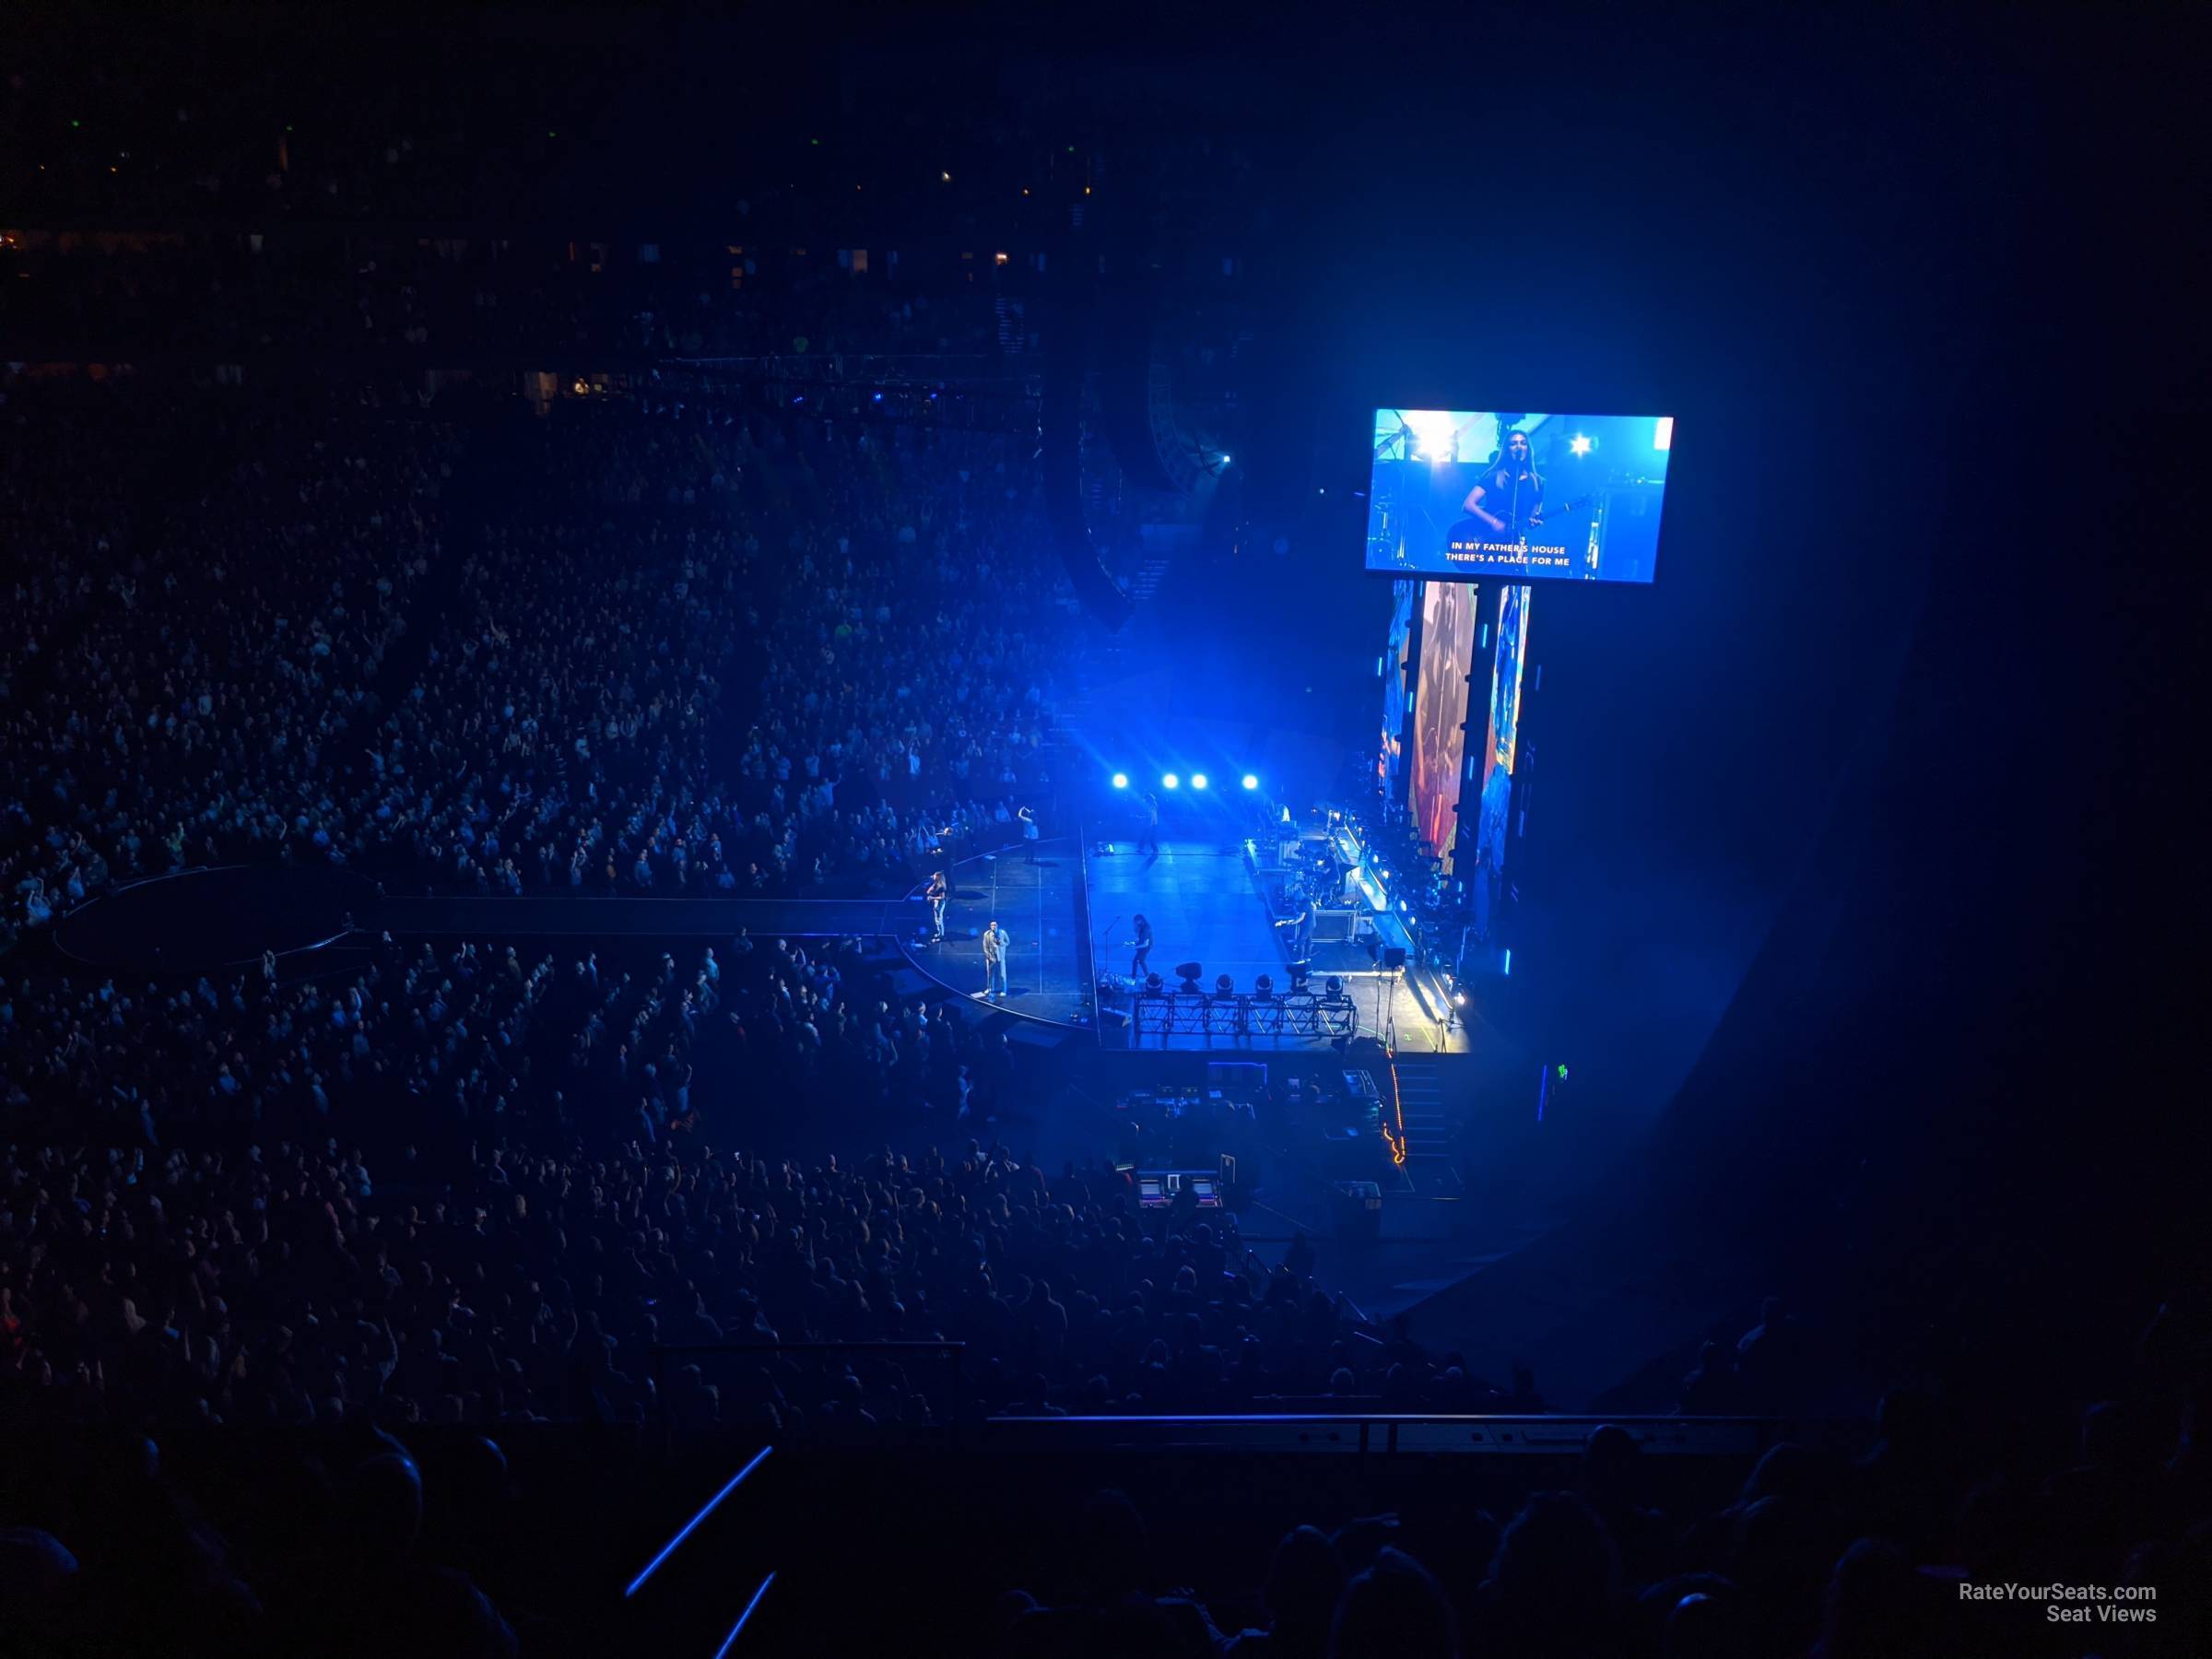 section 212, row g seat view  for concert - bridgestone arena